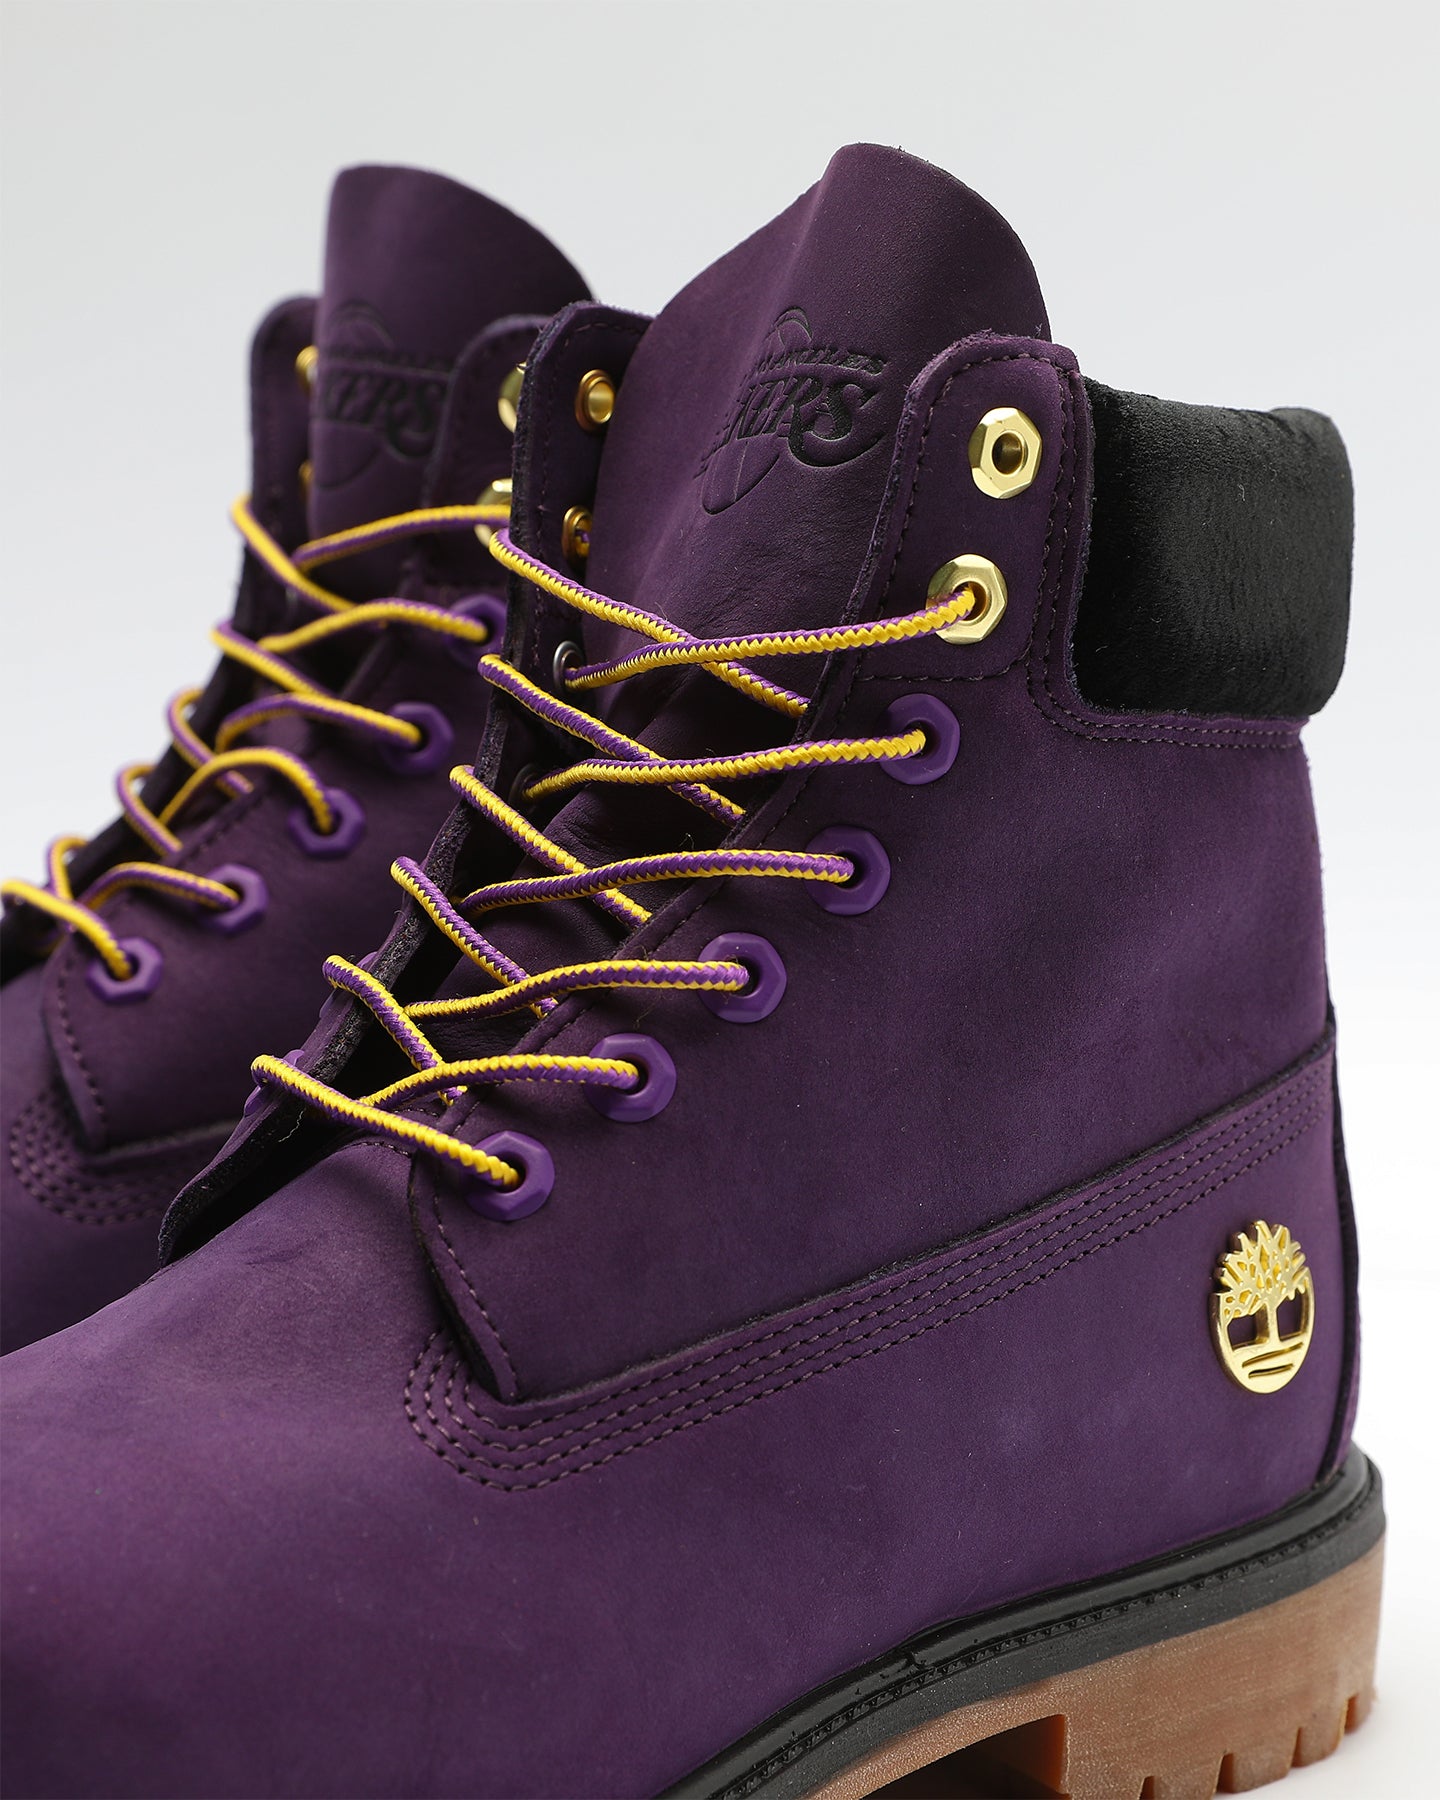 purple timberland boots mens